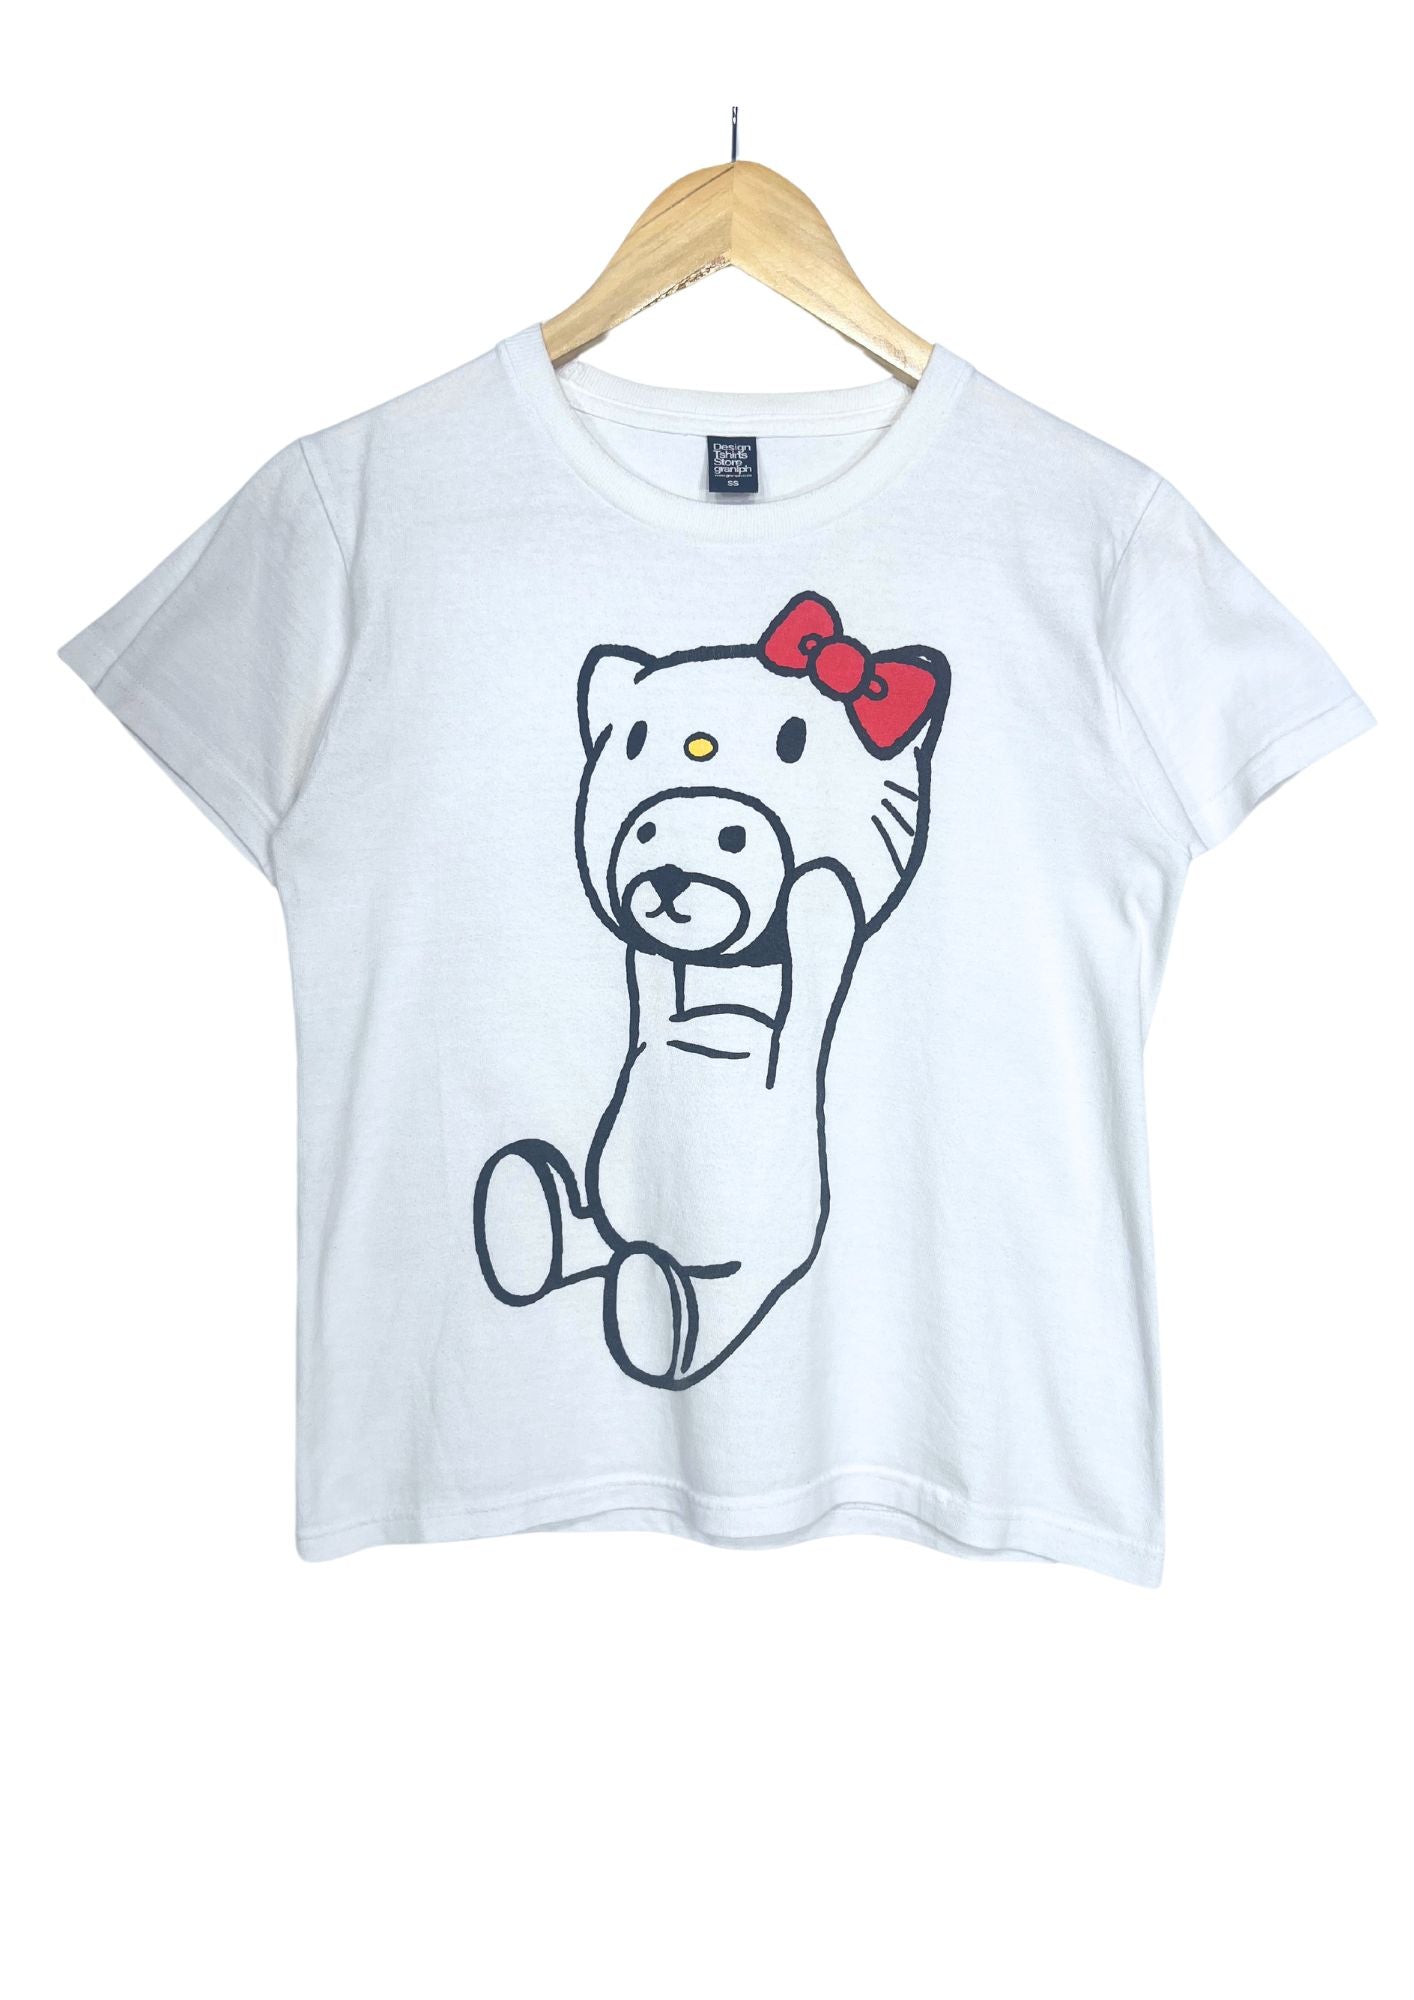 2020 Hello Kitty x Graniph Kitty Bear T-shirt